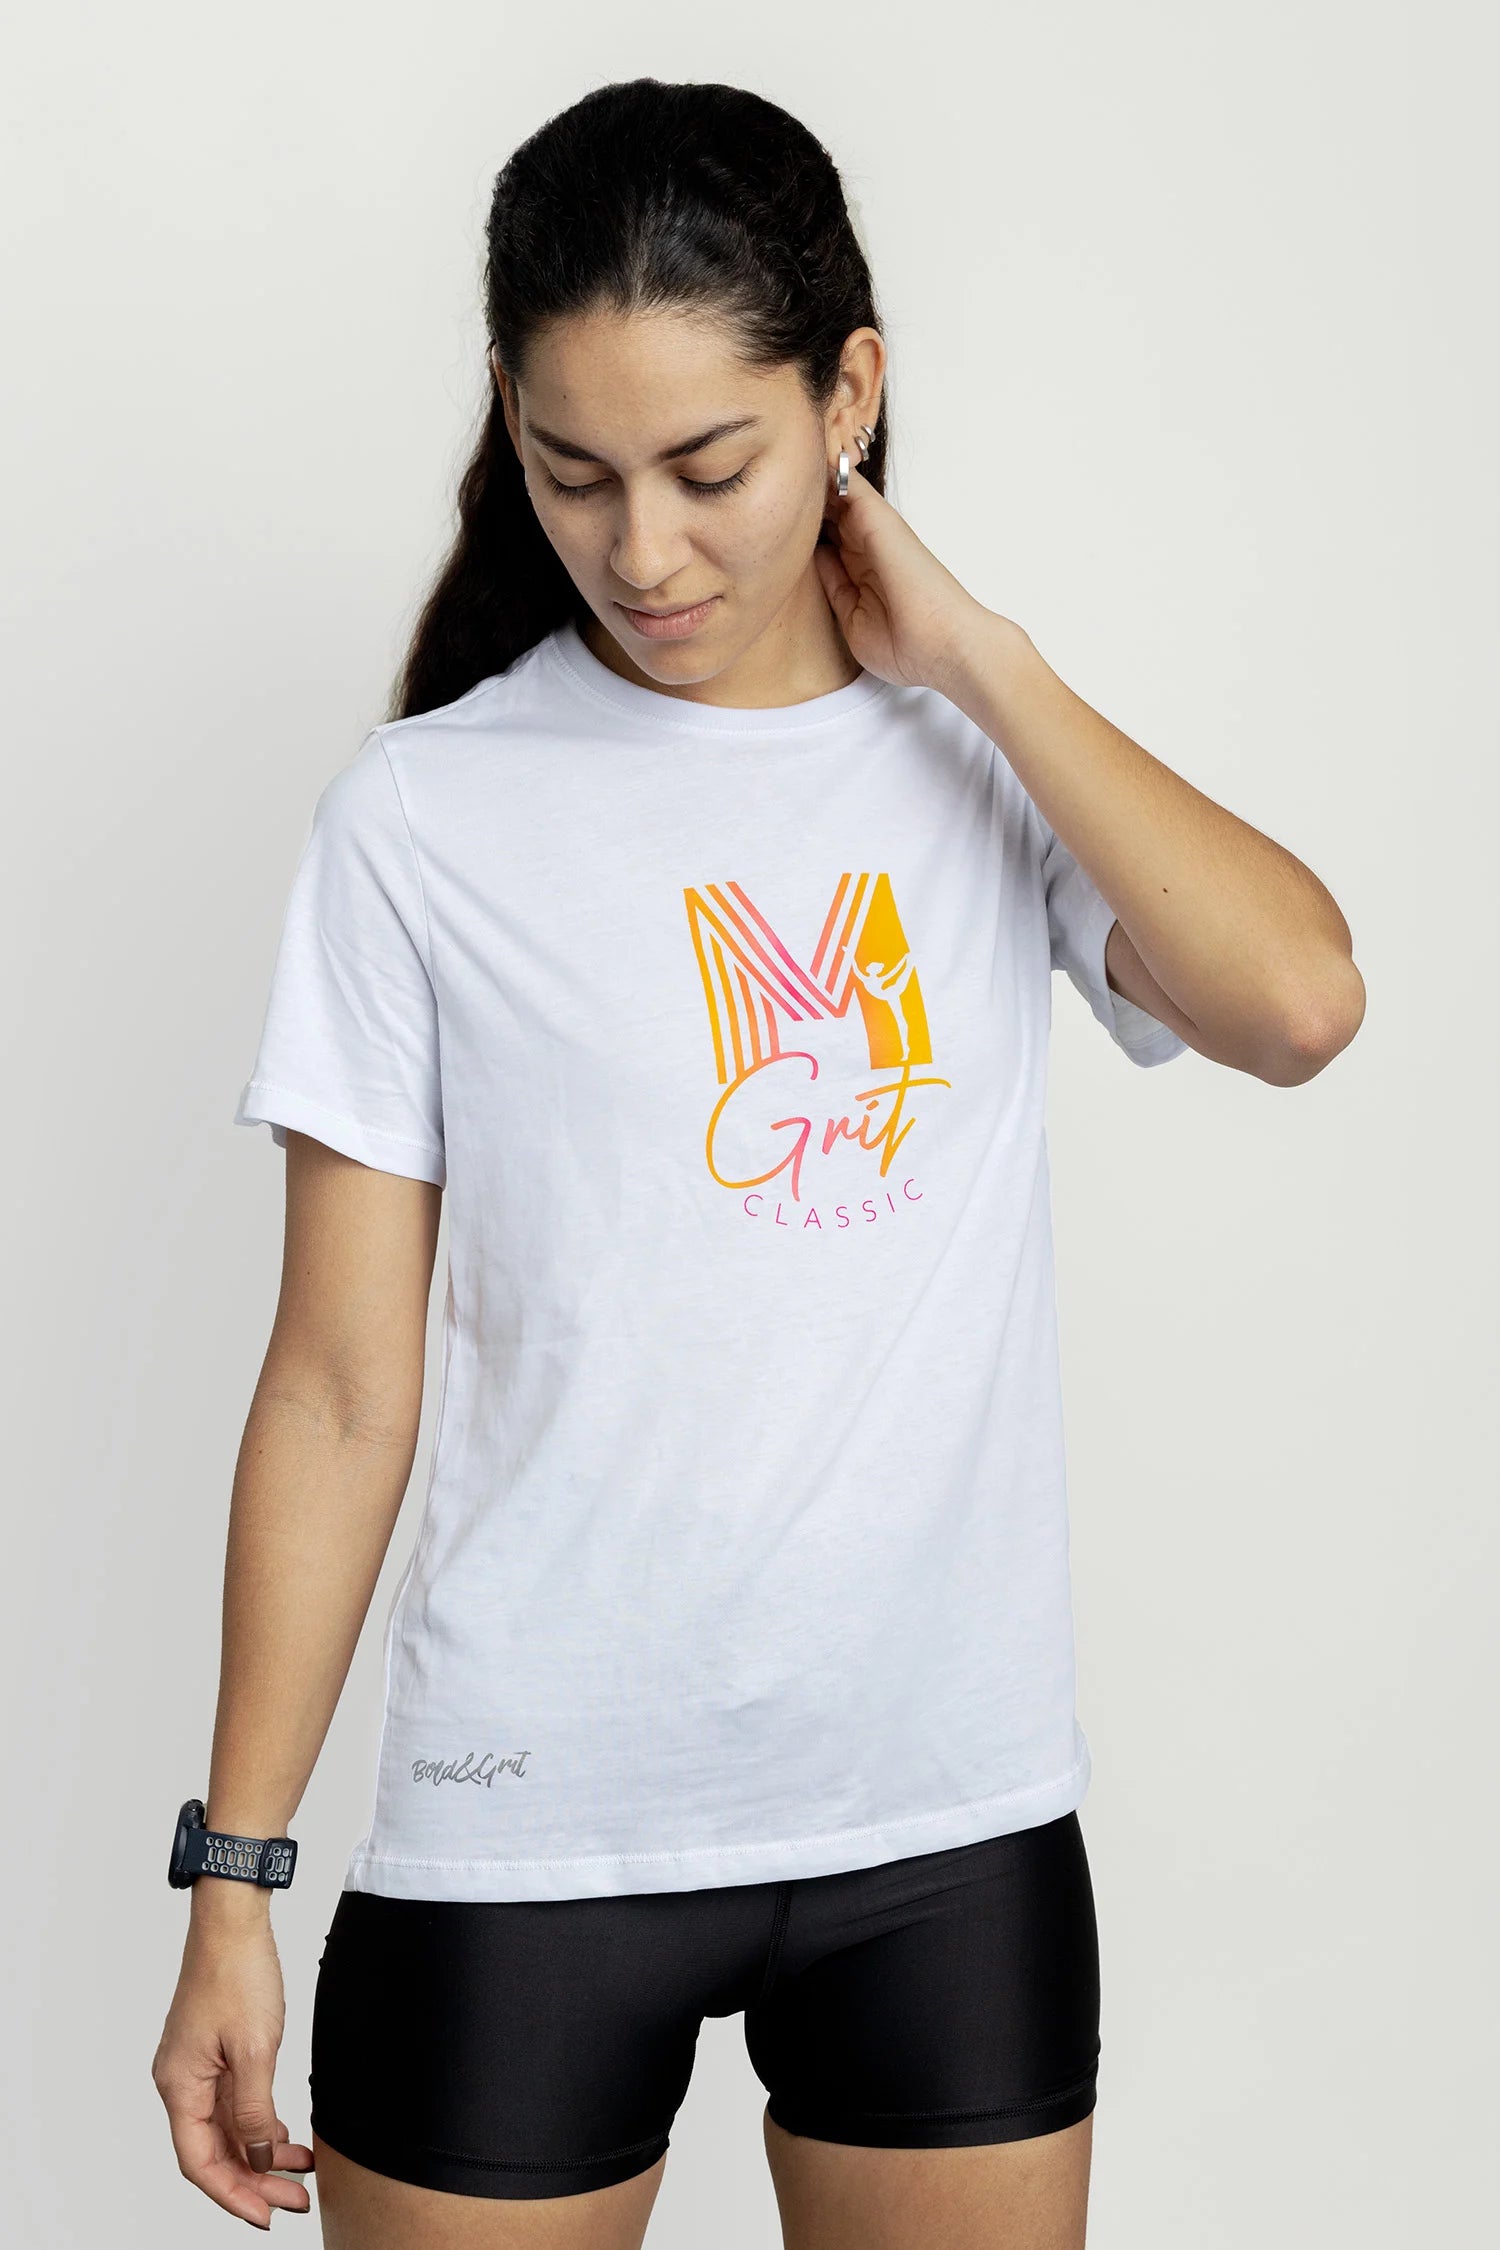 White t-shirt - Miami Grit